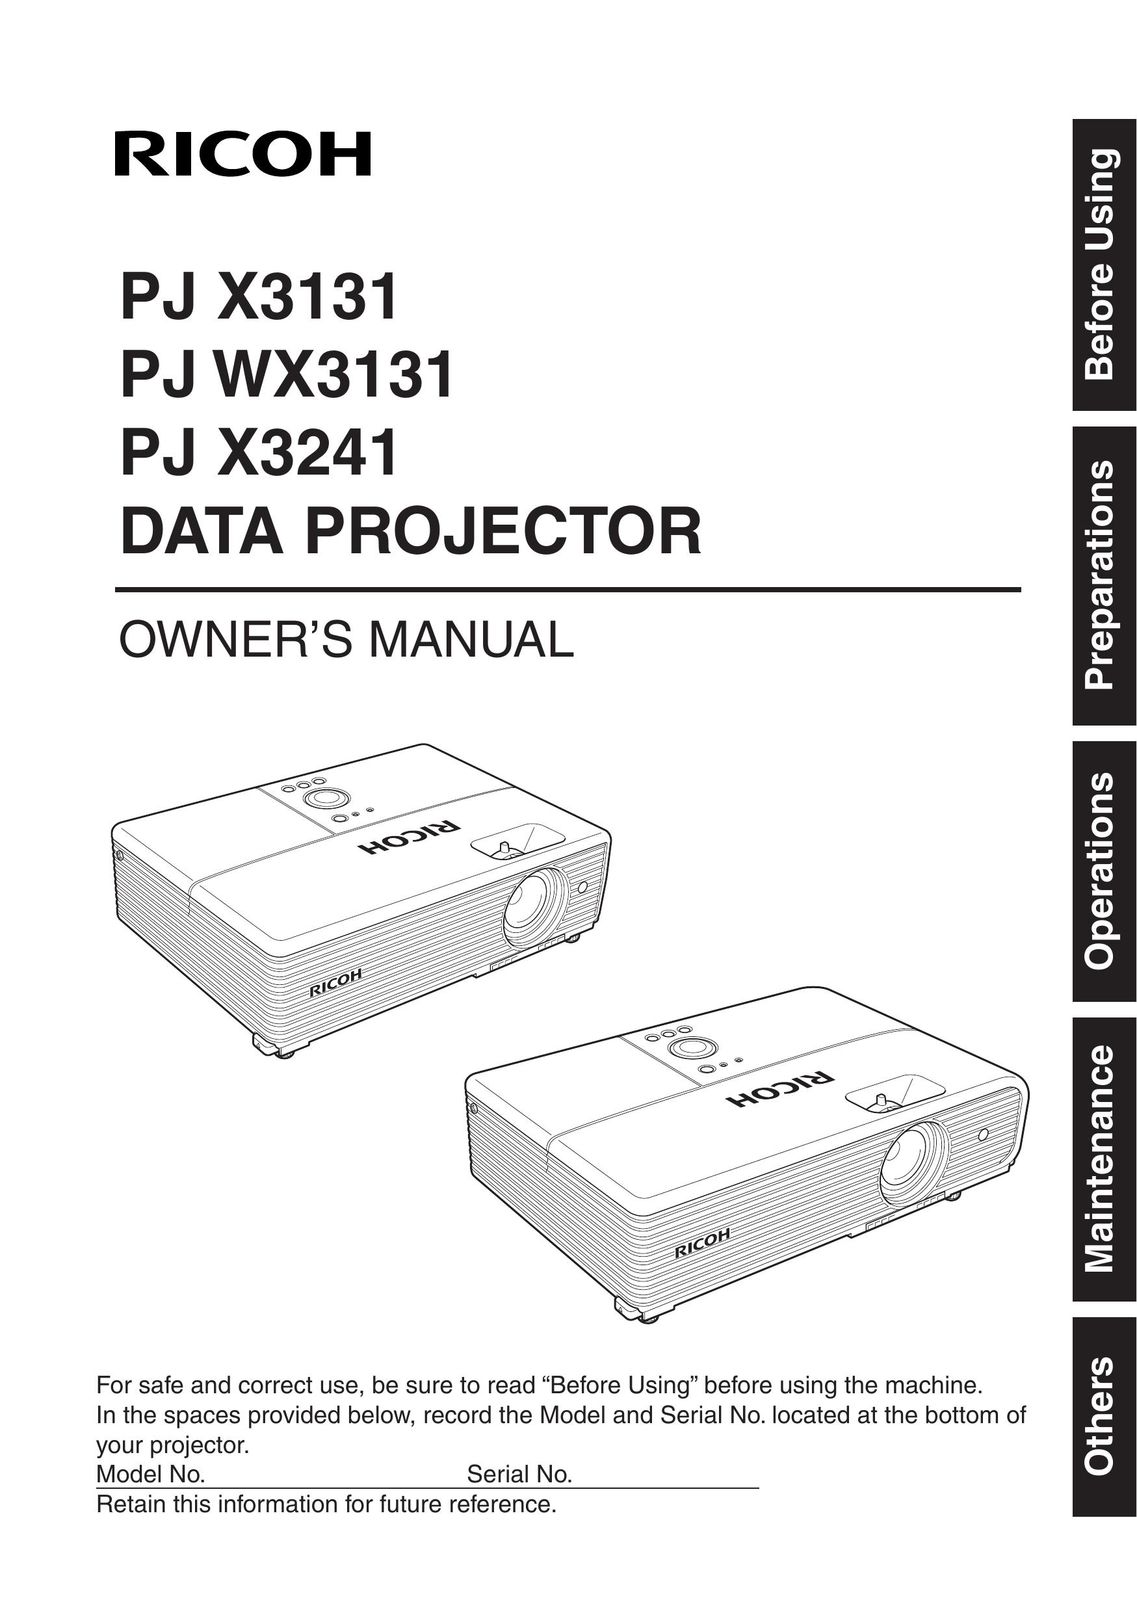 Ricoh PJ X3241 Projector User Manual